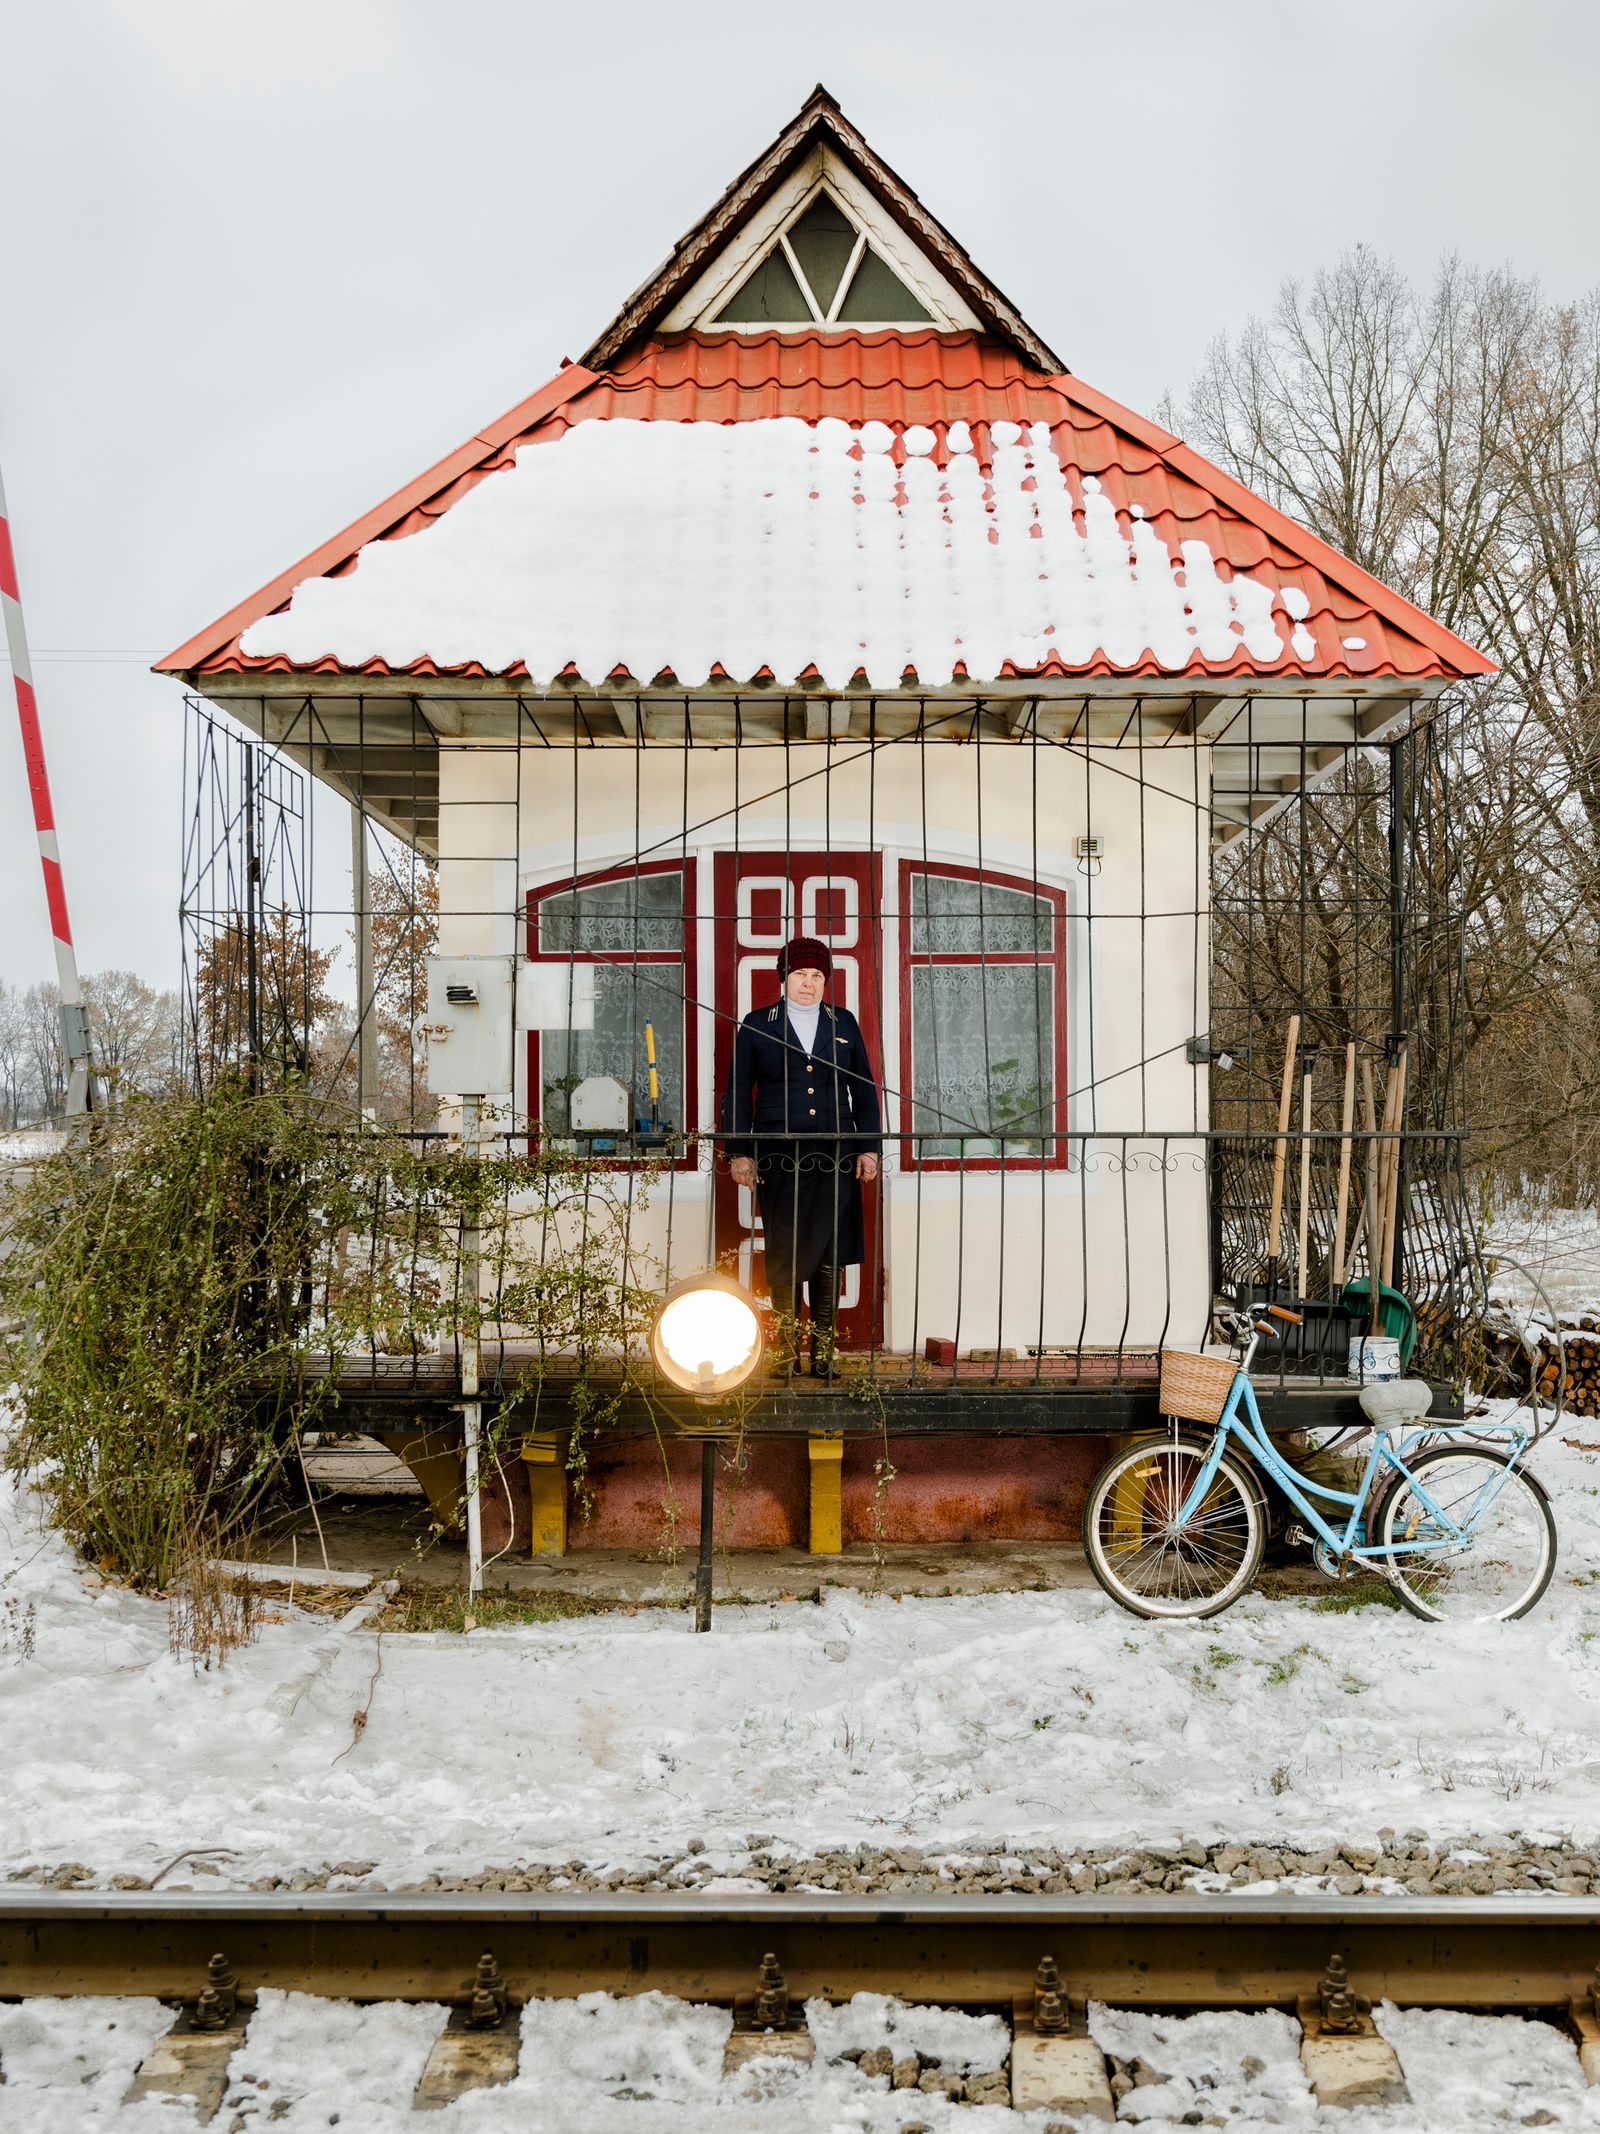 © Sasha Maslov - Image from the Ukrainian Railroad Ladies photography project